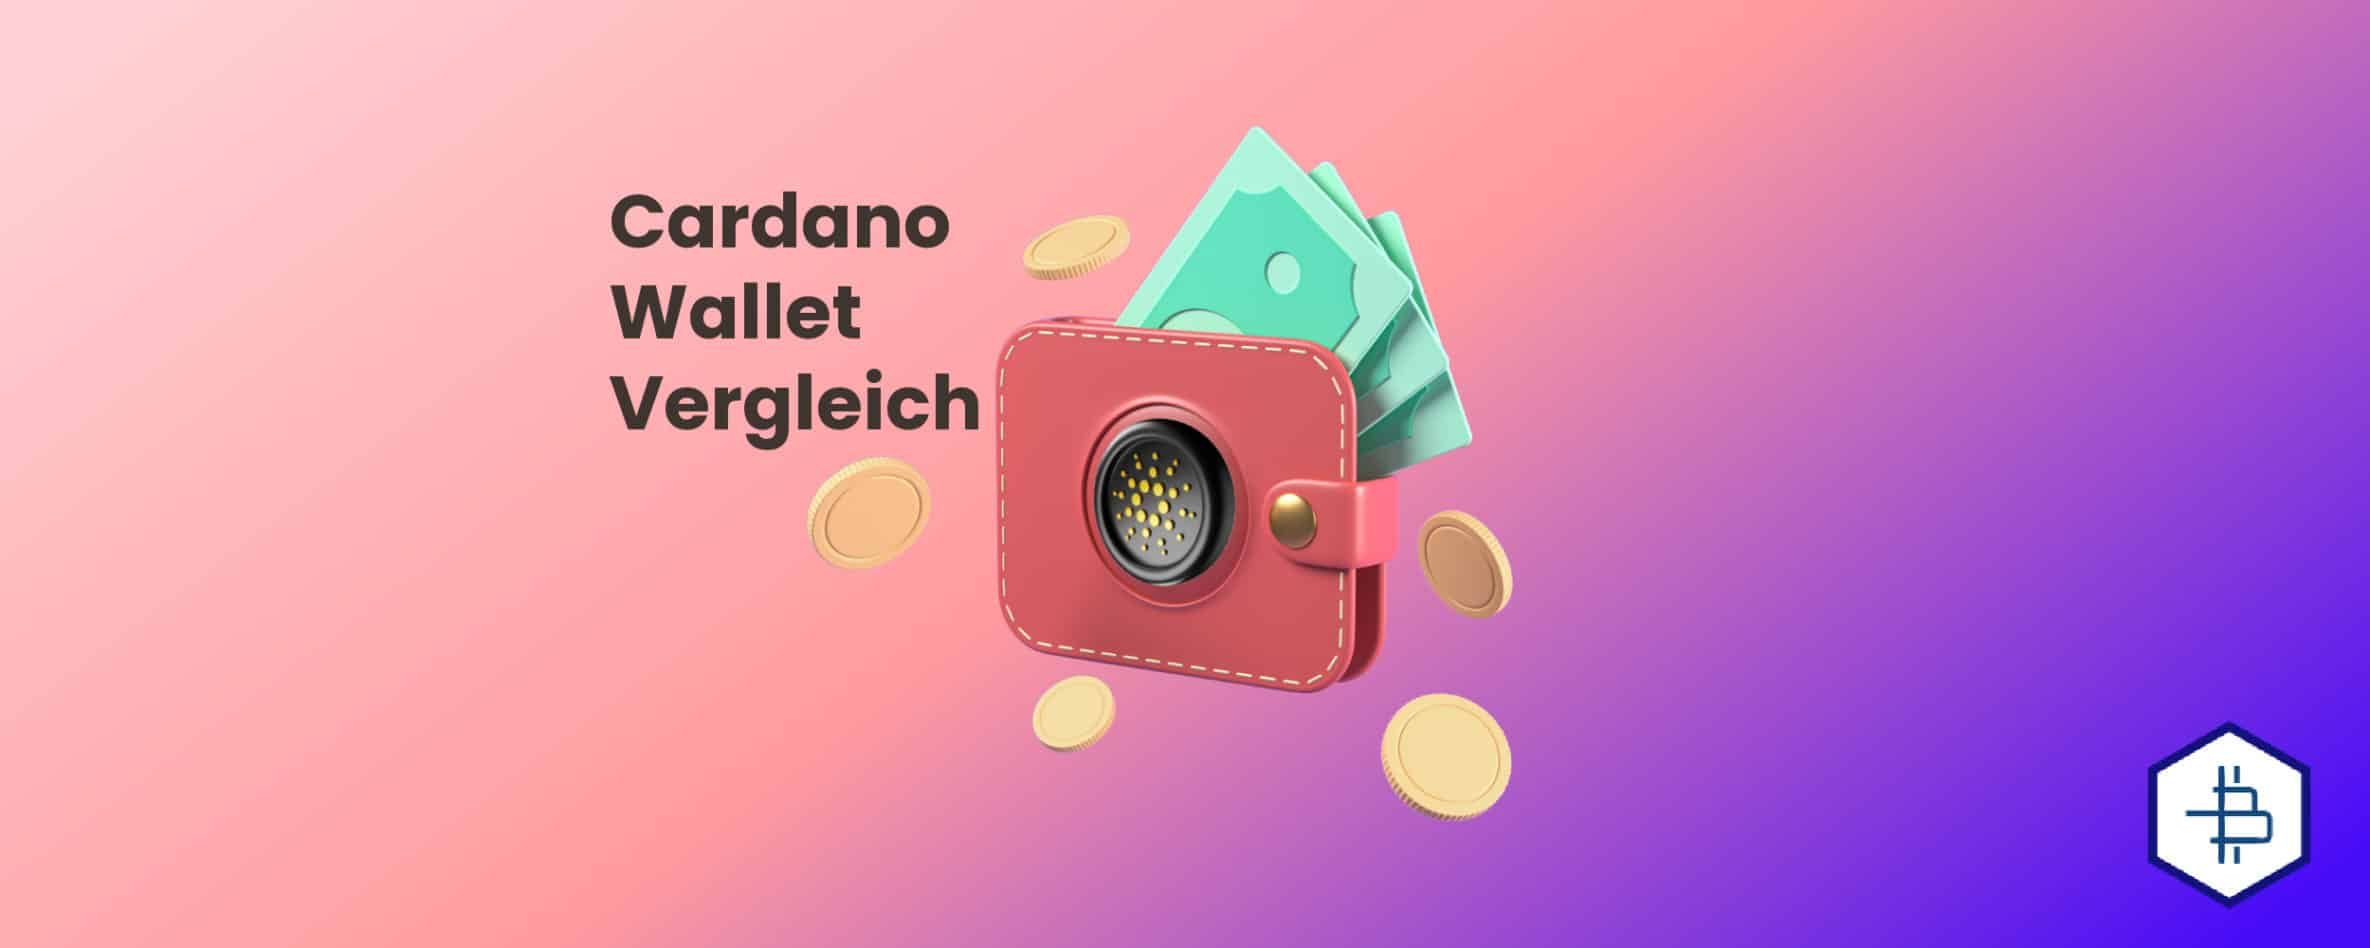 Cardano Wallet Vergleich